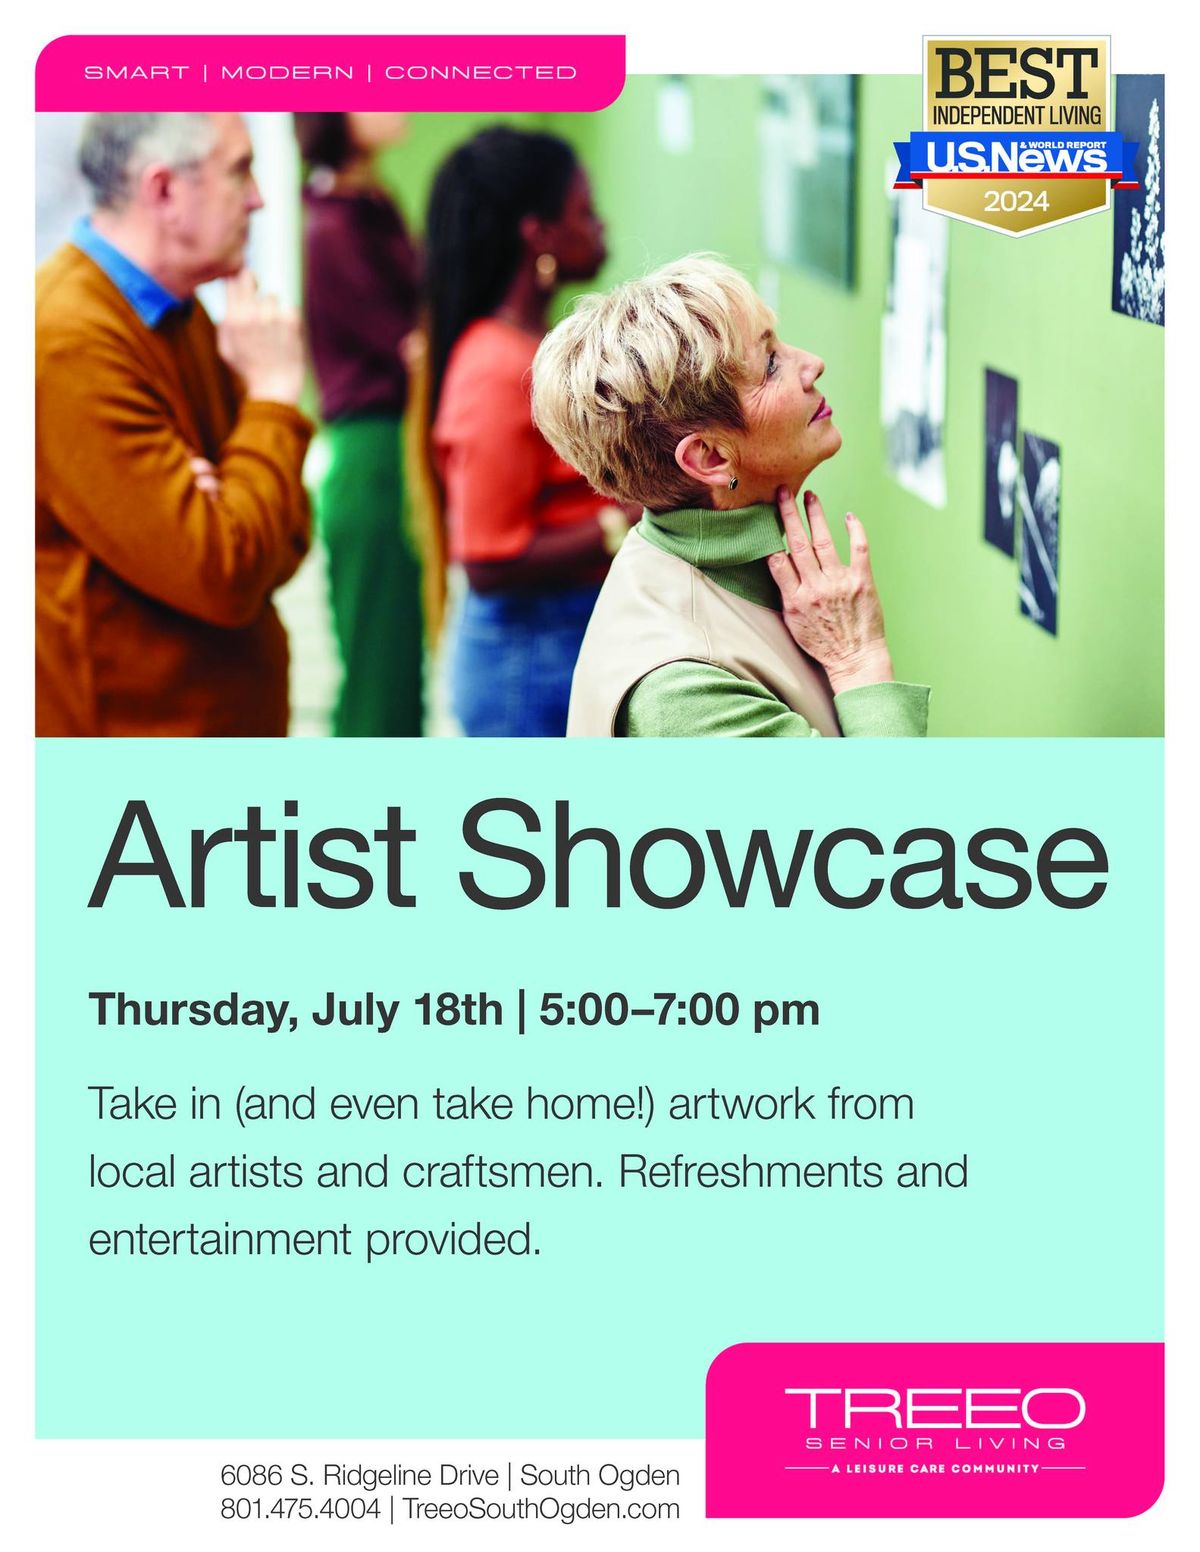 Artist Showcase Event